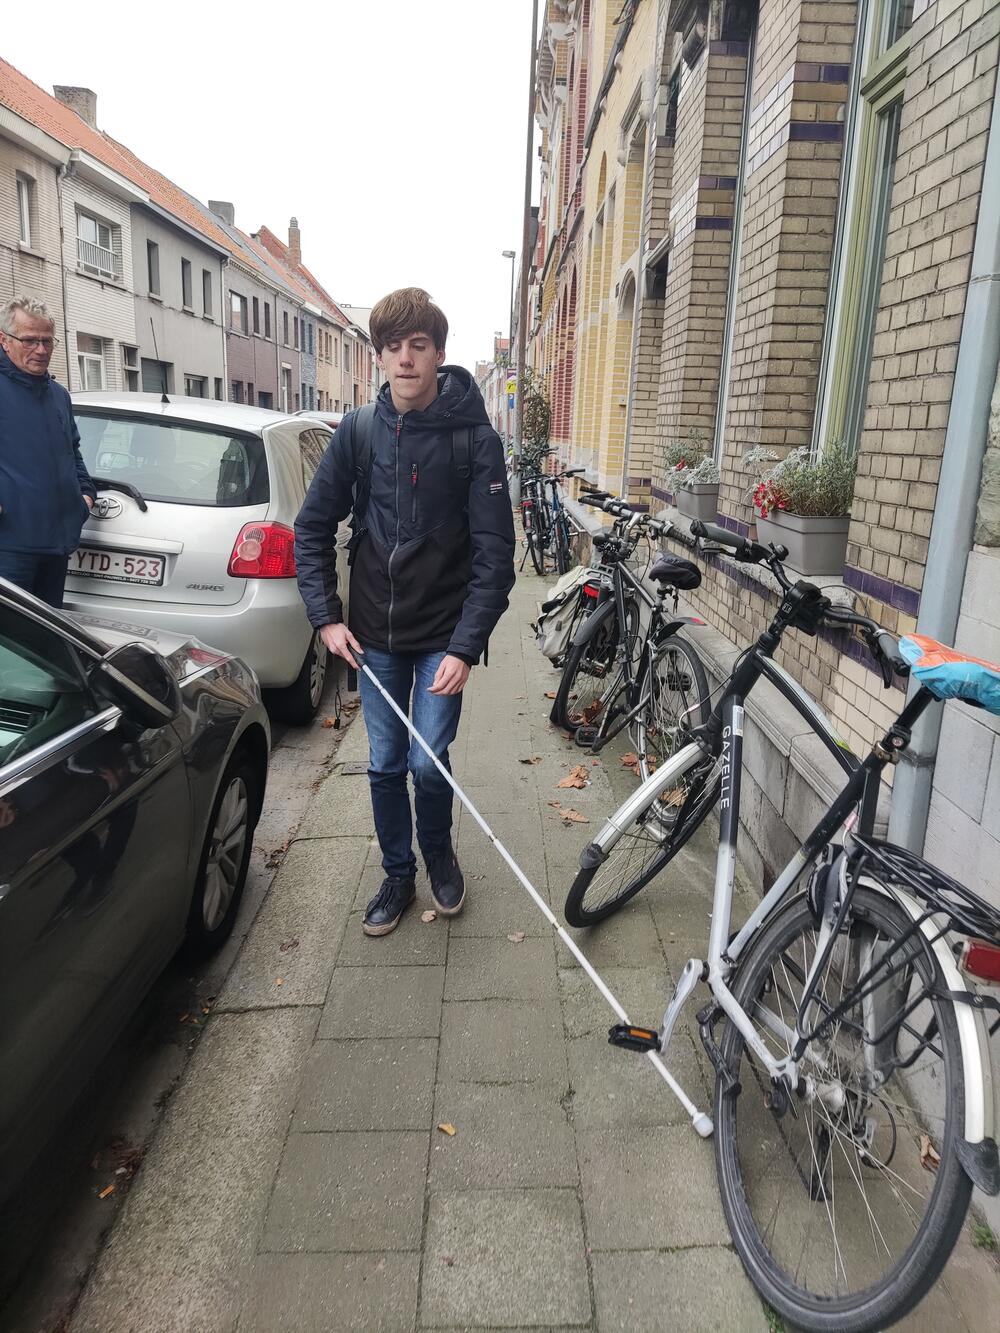 Project fietsparkeren